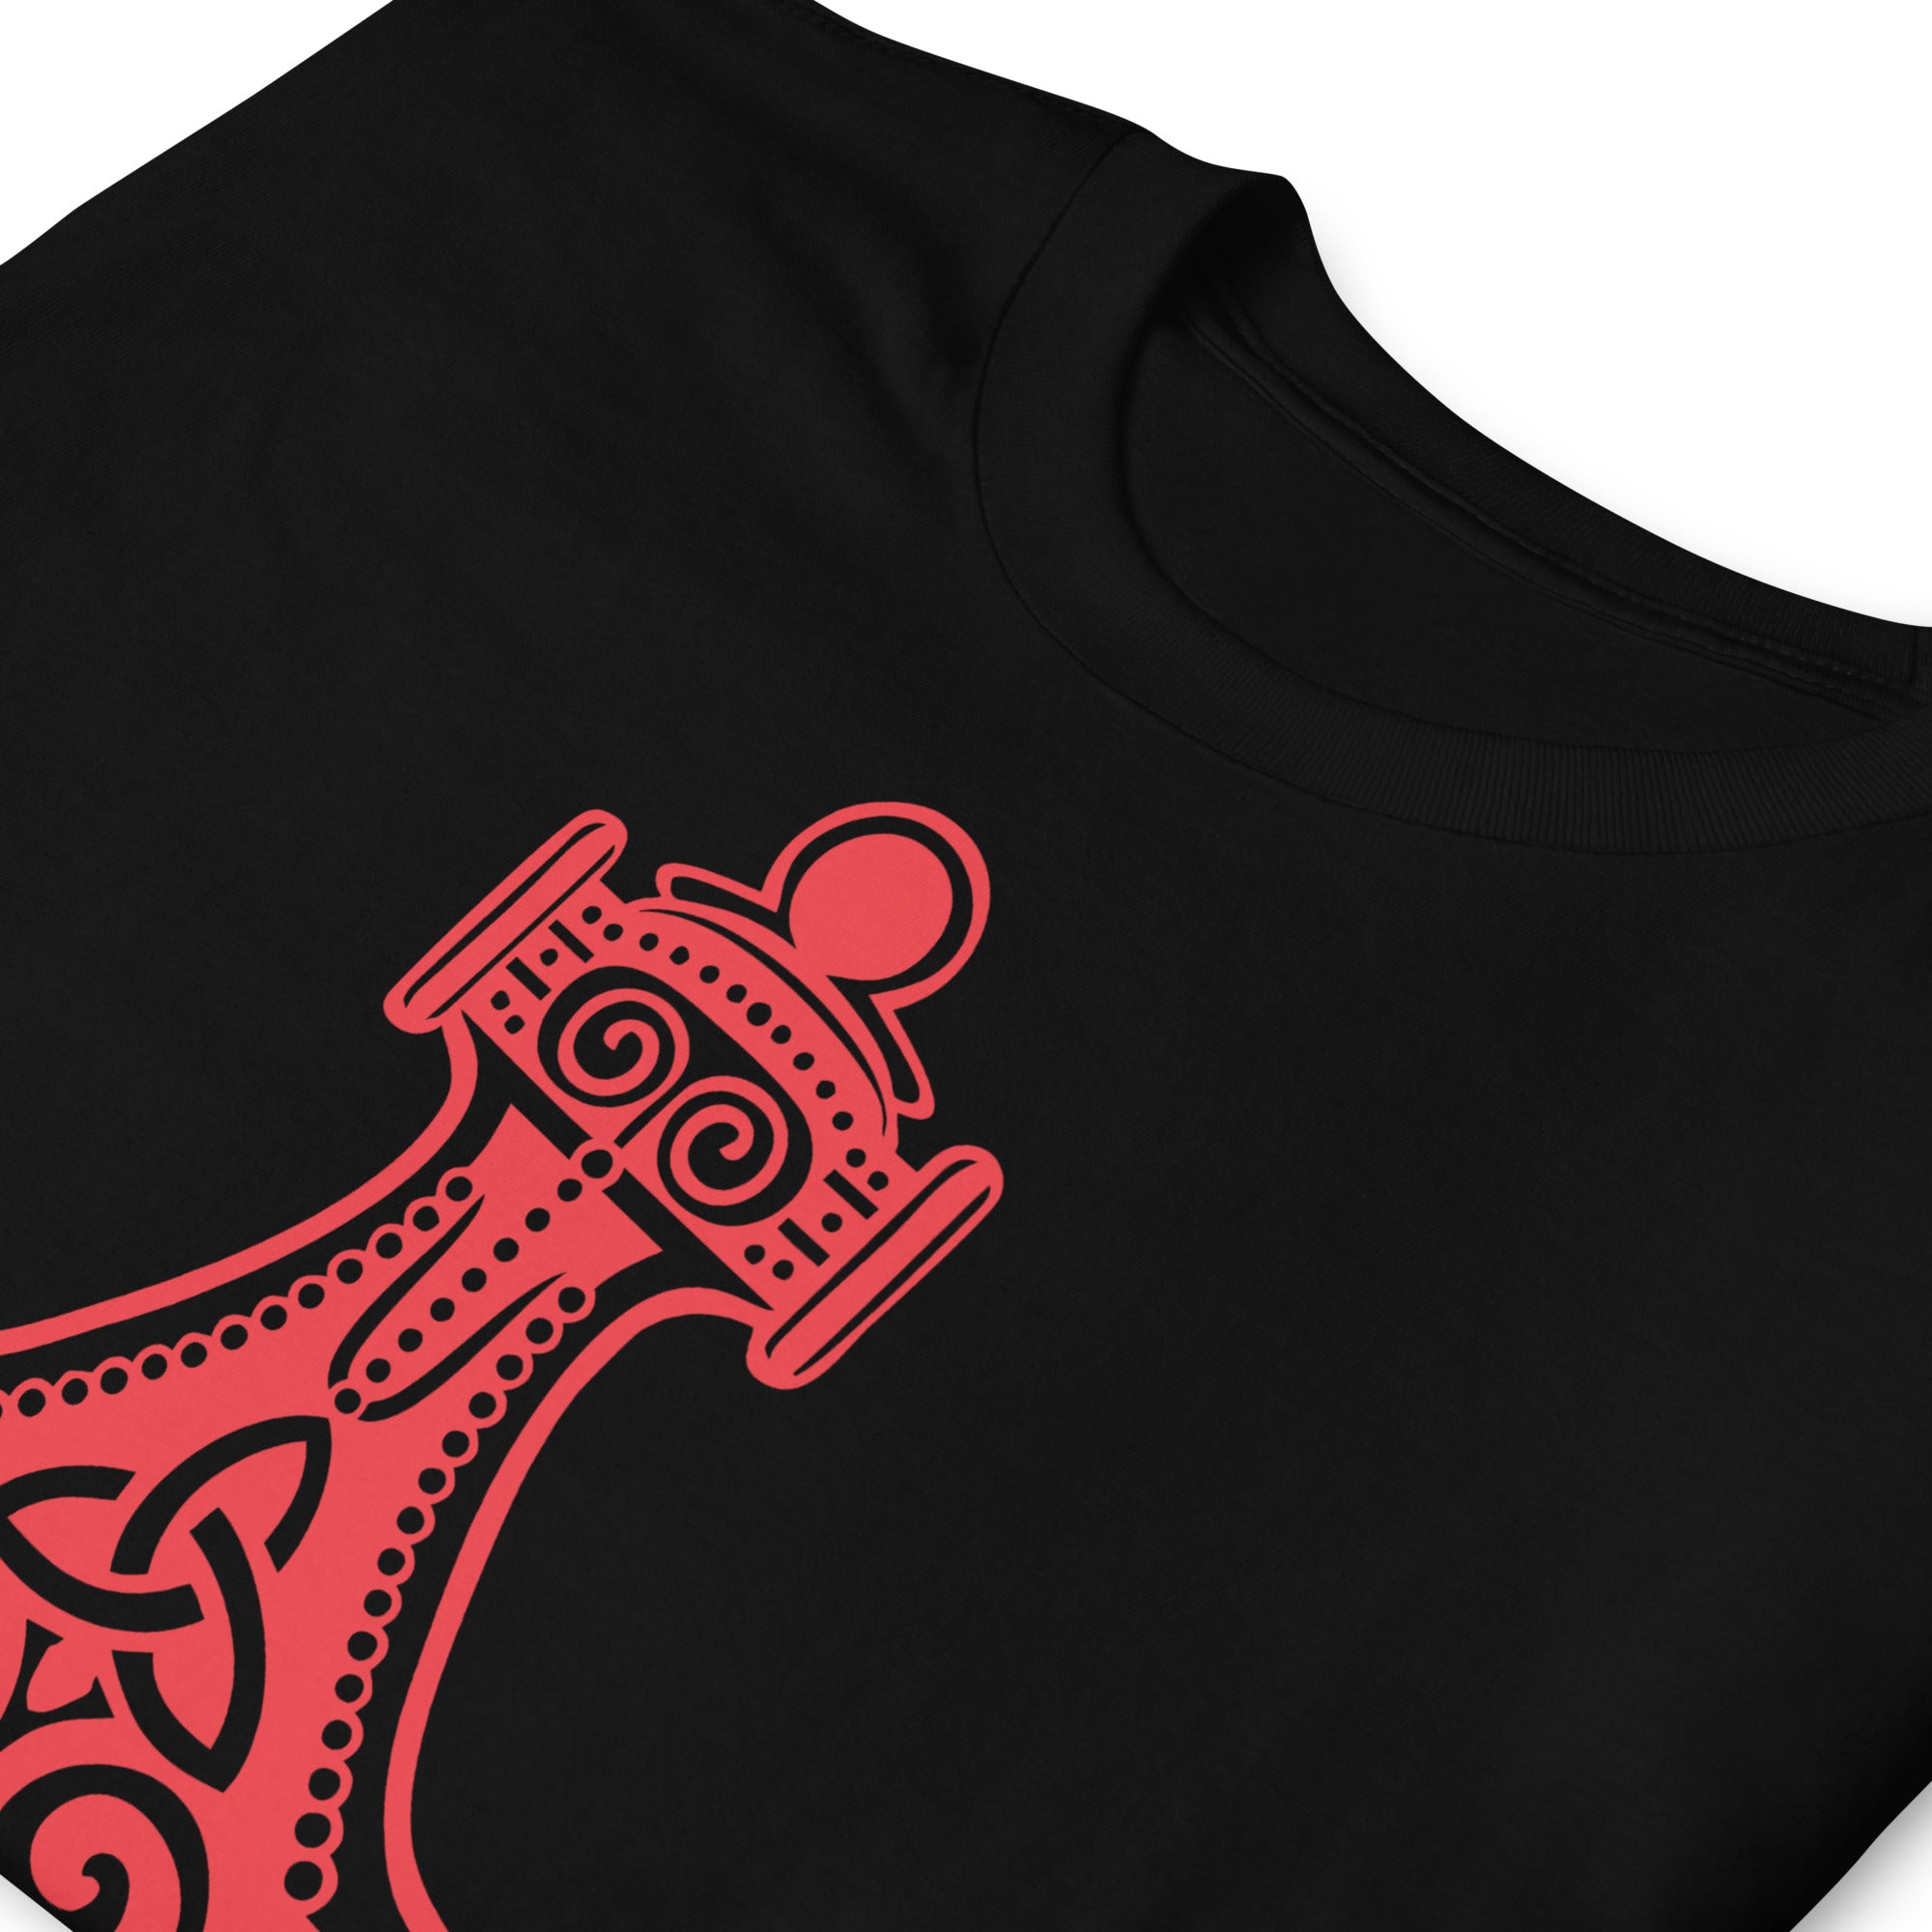 Thor's Hammer Mjolnir Norse Mythology Men's Short-Sleeve T-Shirt Red Print - Edge of Life Designs